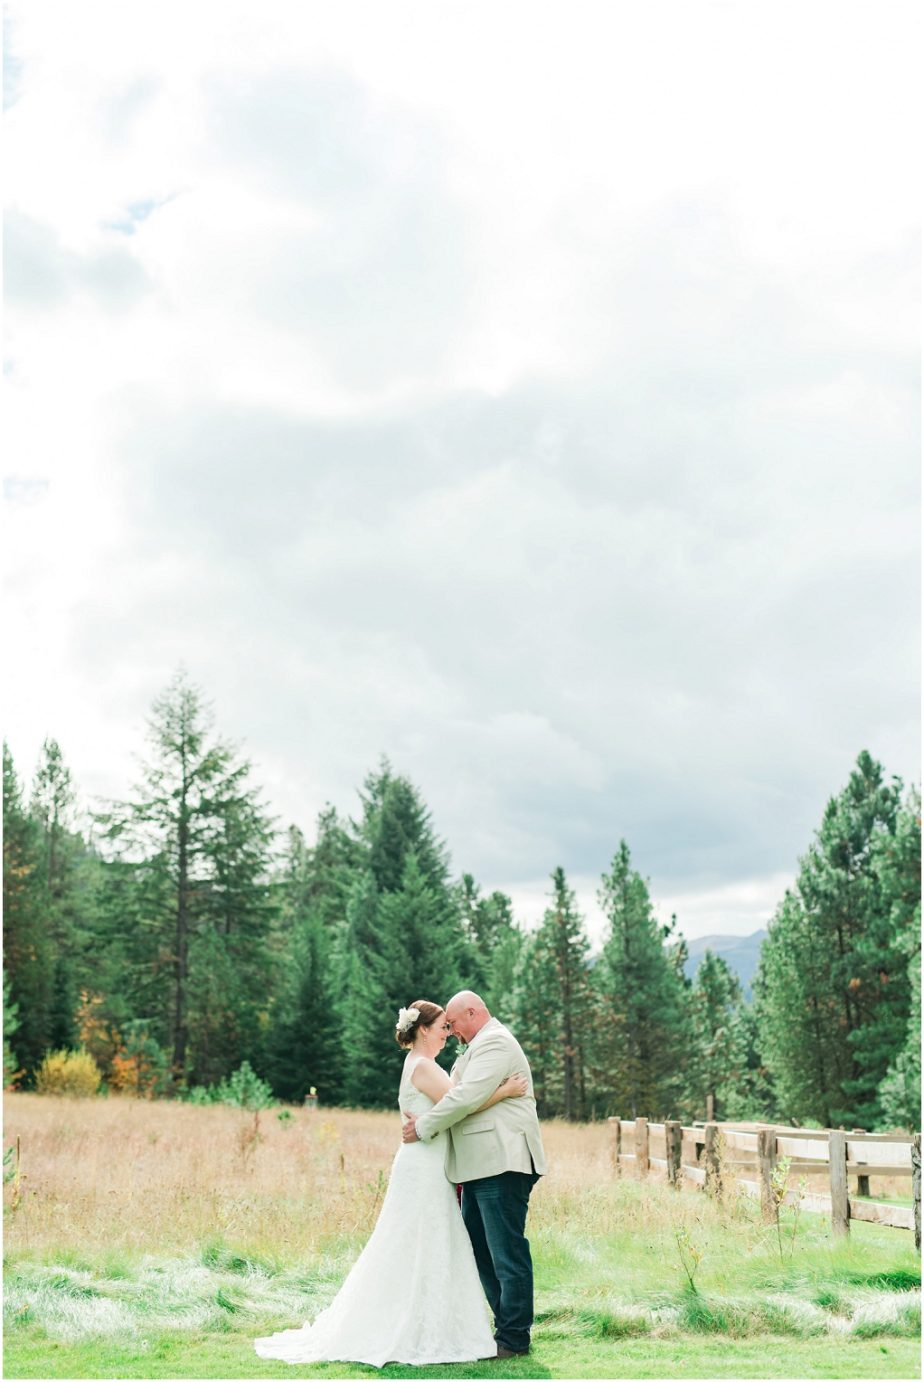 Pine River Ranch Wedding Bride and Groom Formal Portraits